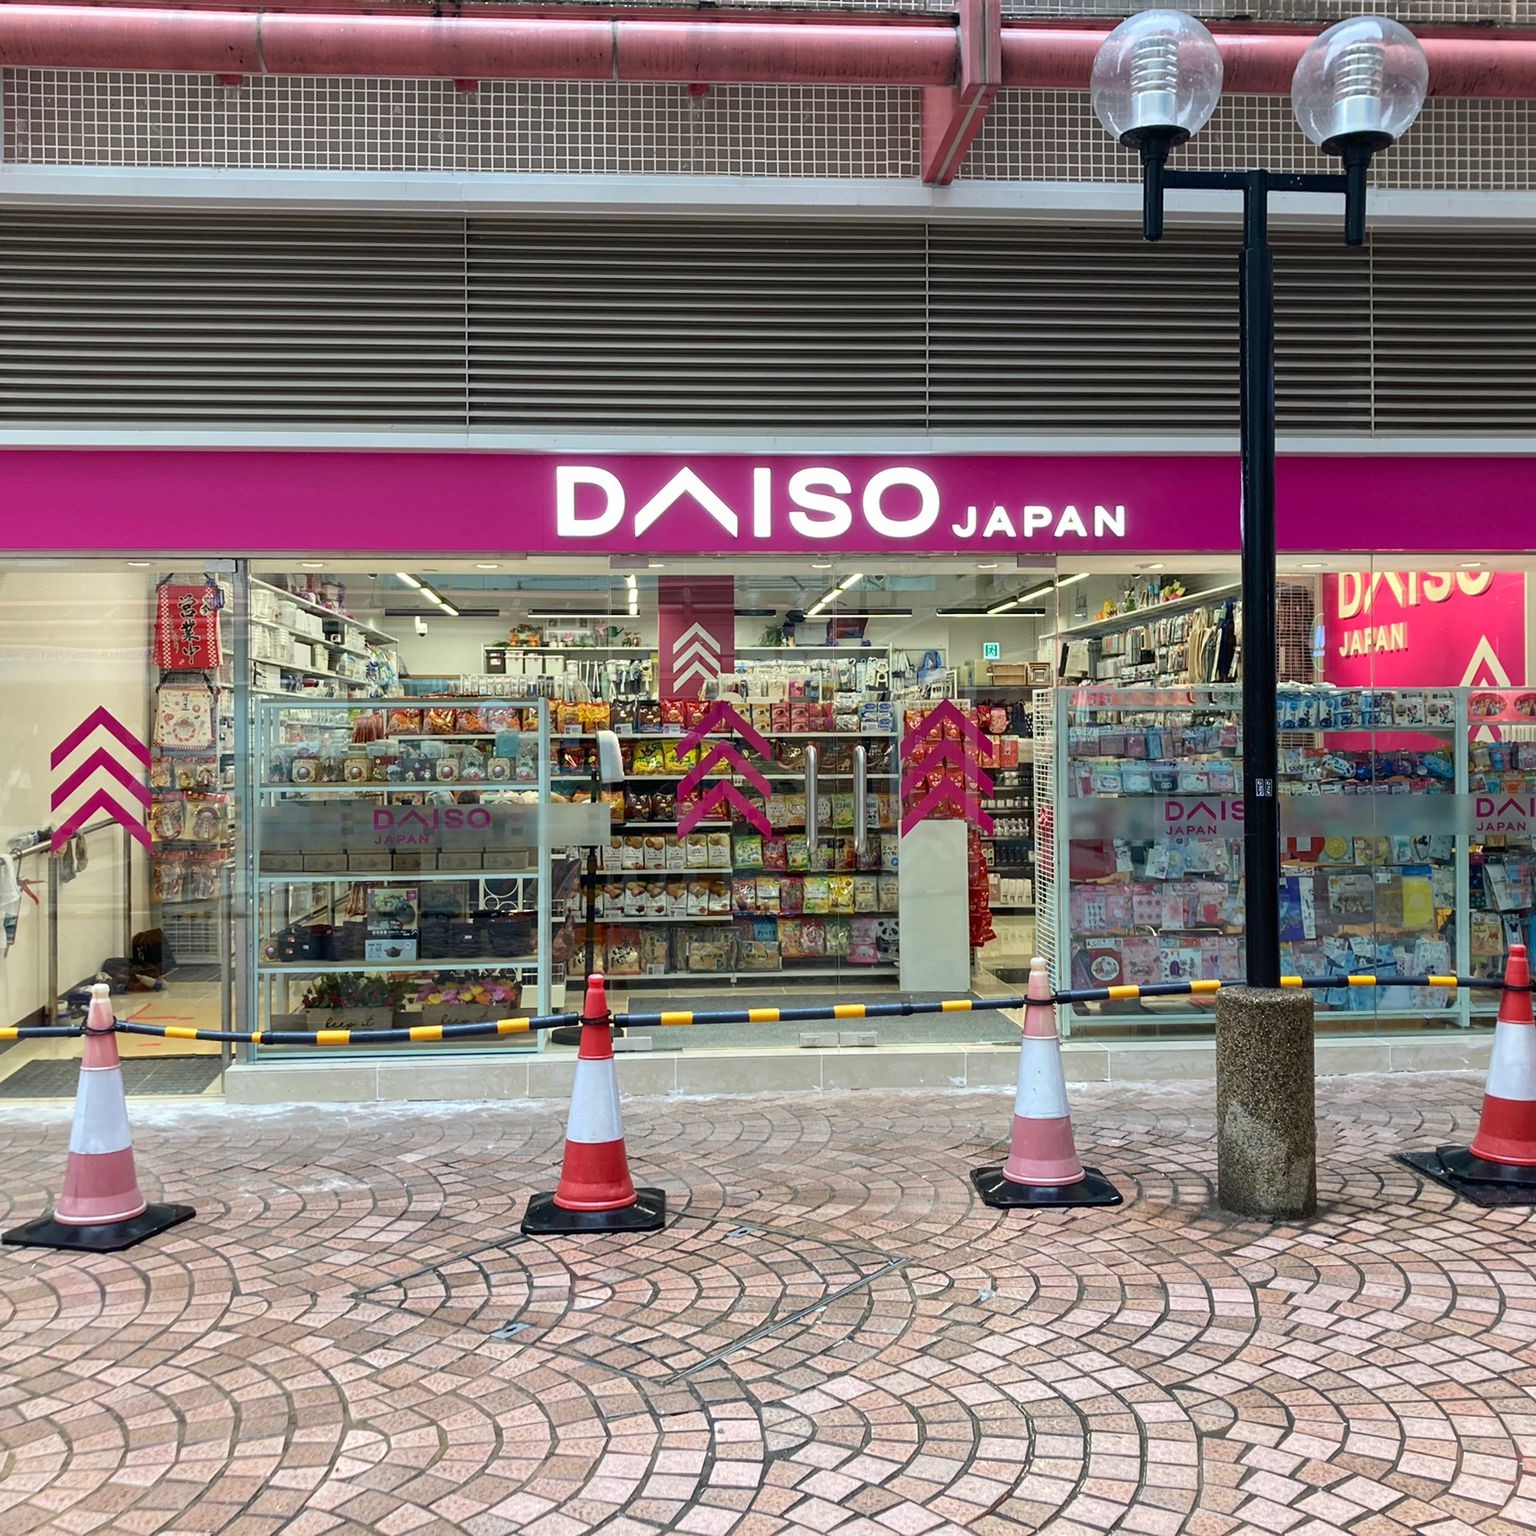 Daiso Japan 粉岭中心店